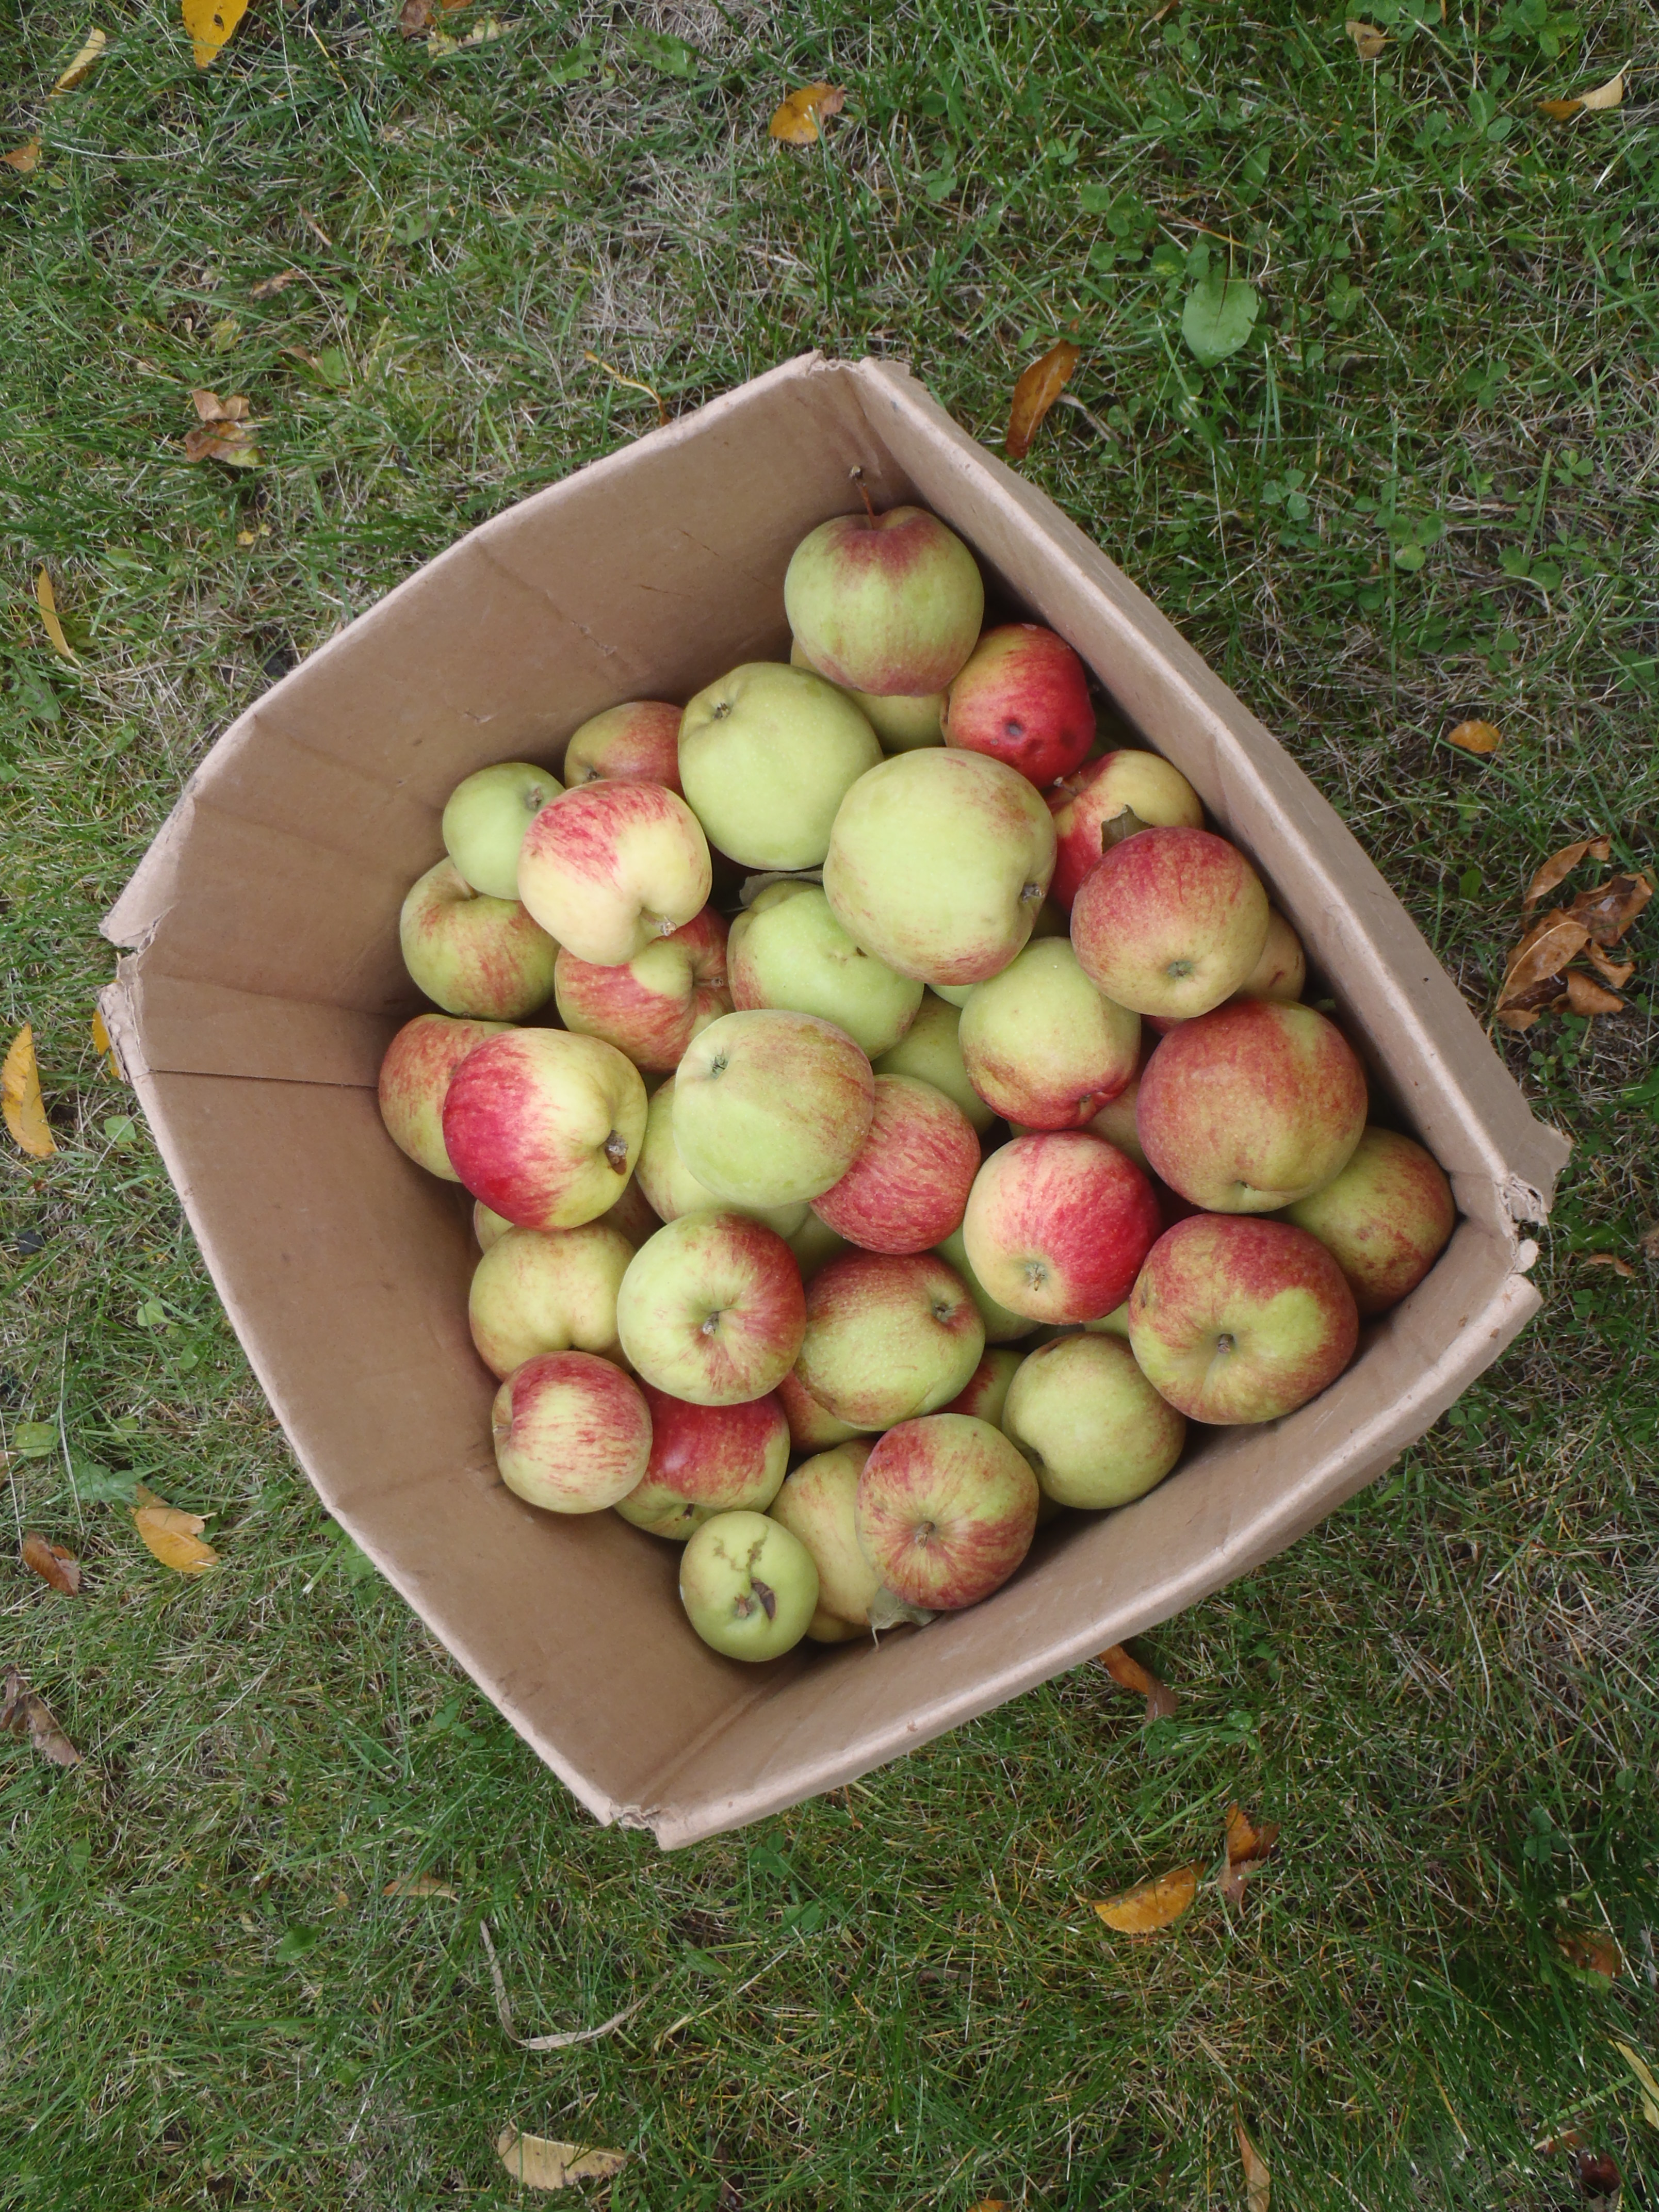 A box o' apples.